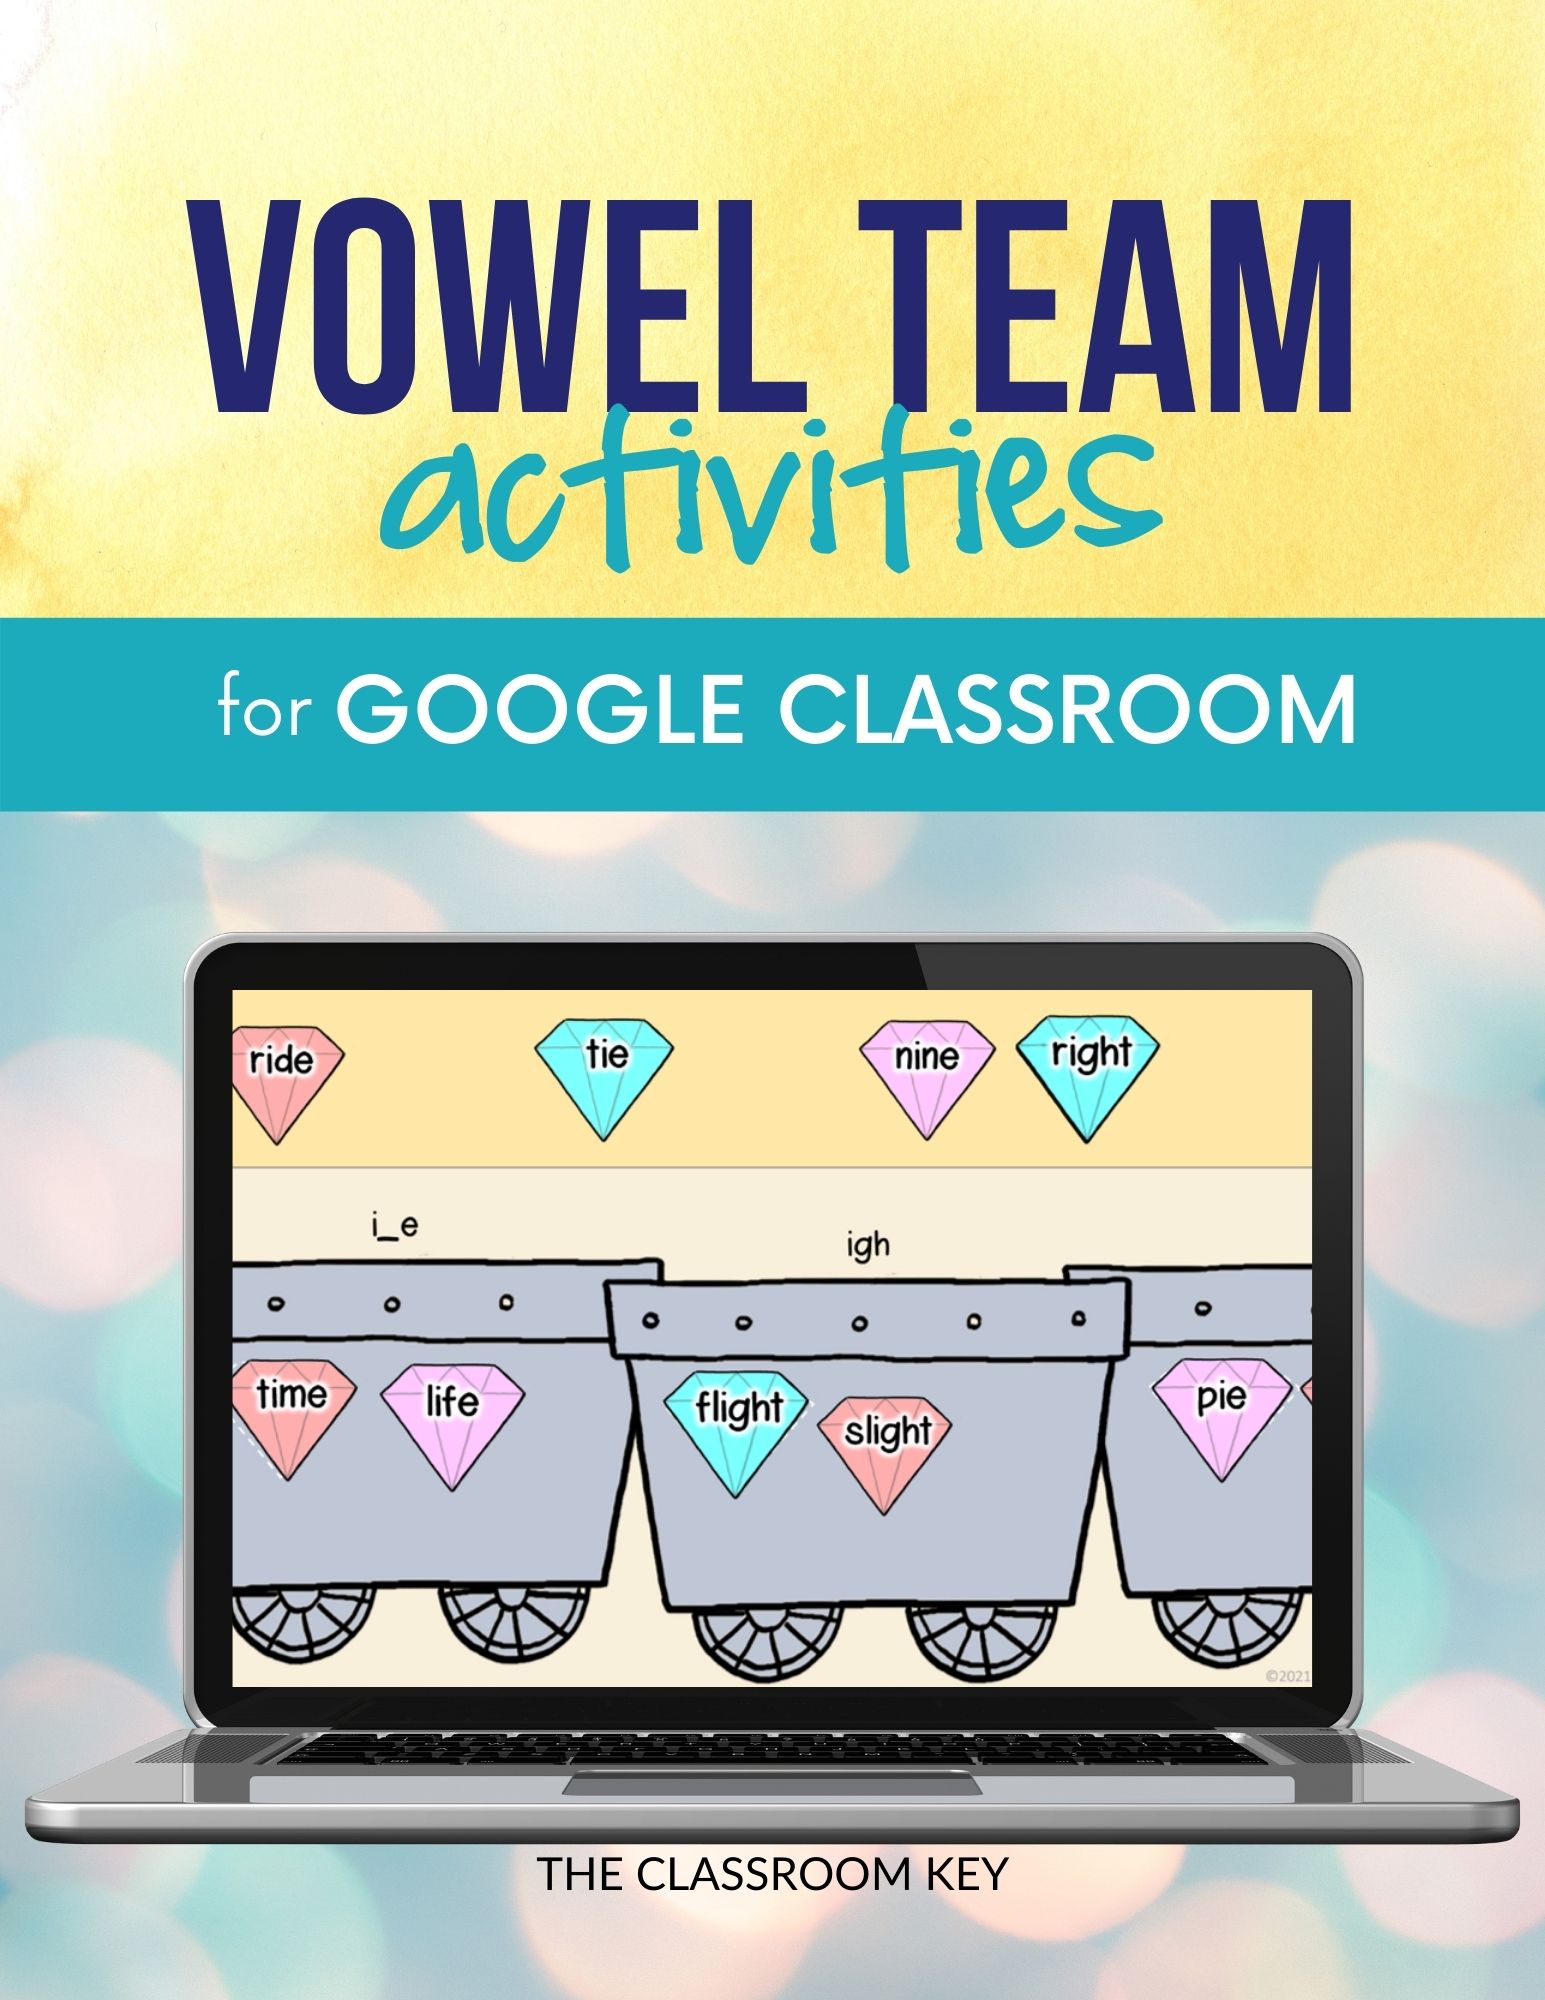 vowel teams activities for Google classroom